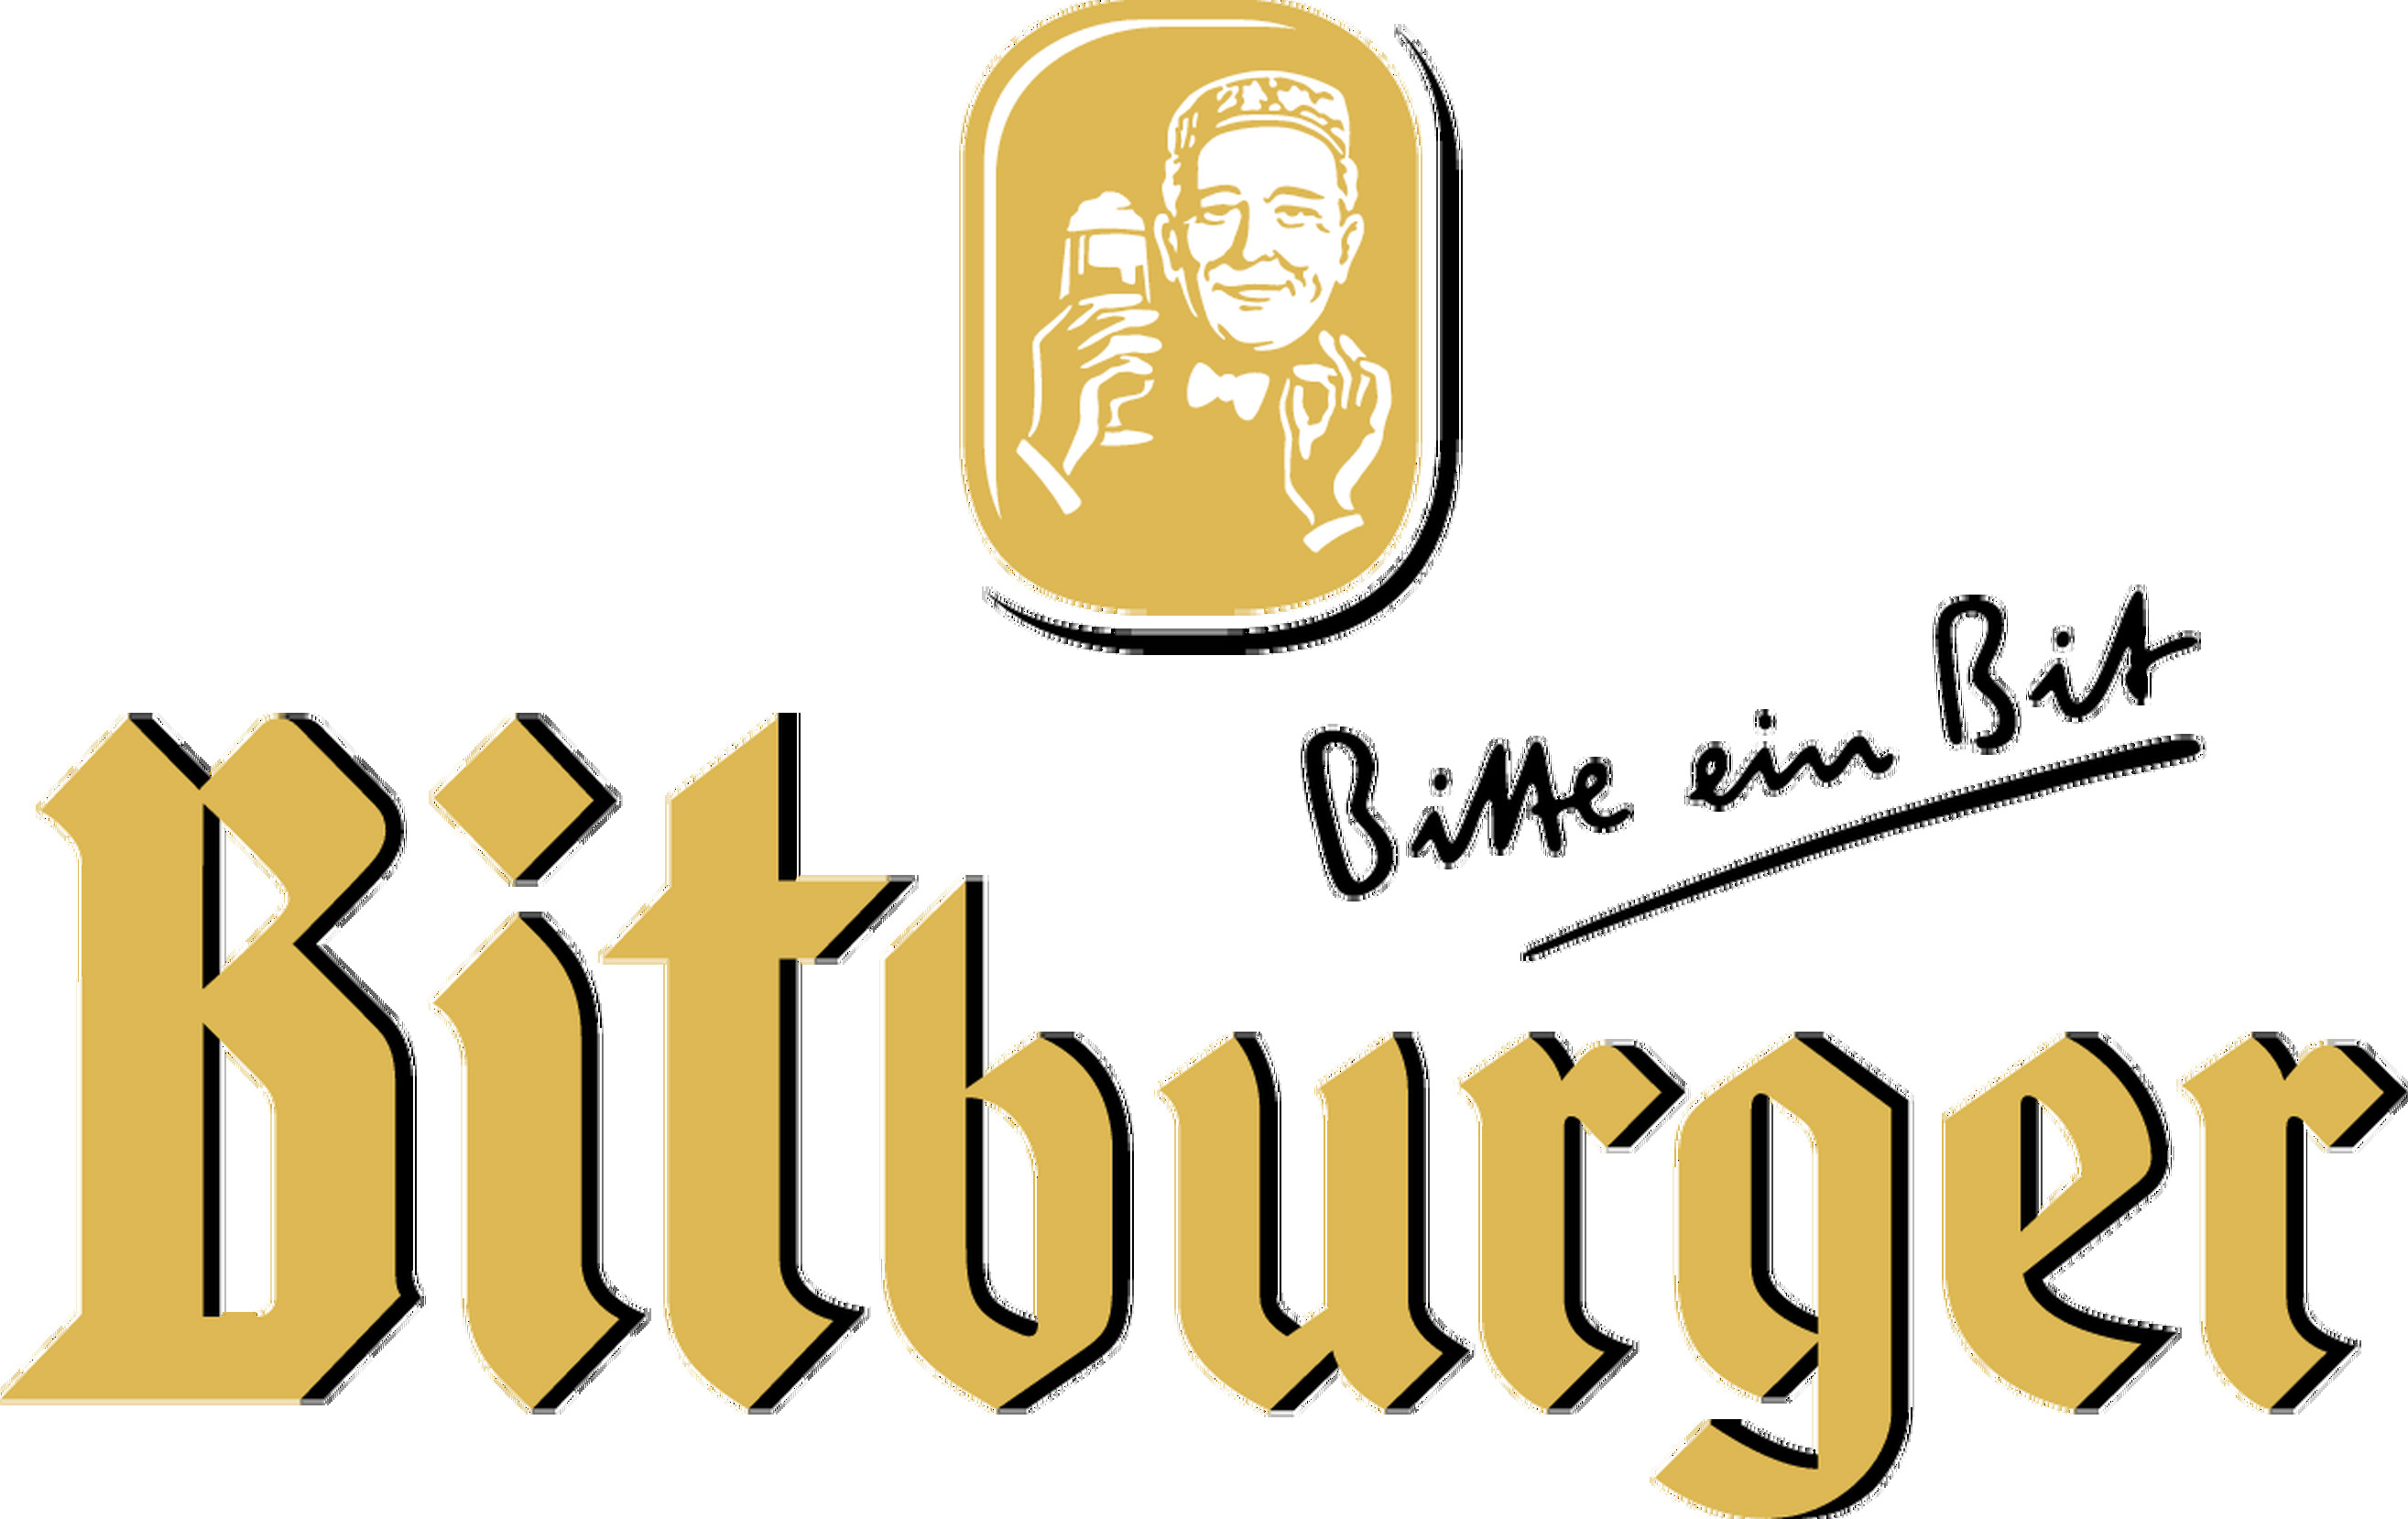 Bitburger Braugruppe